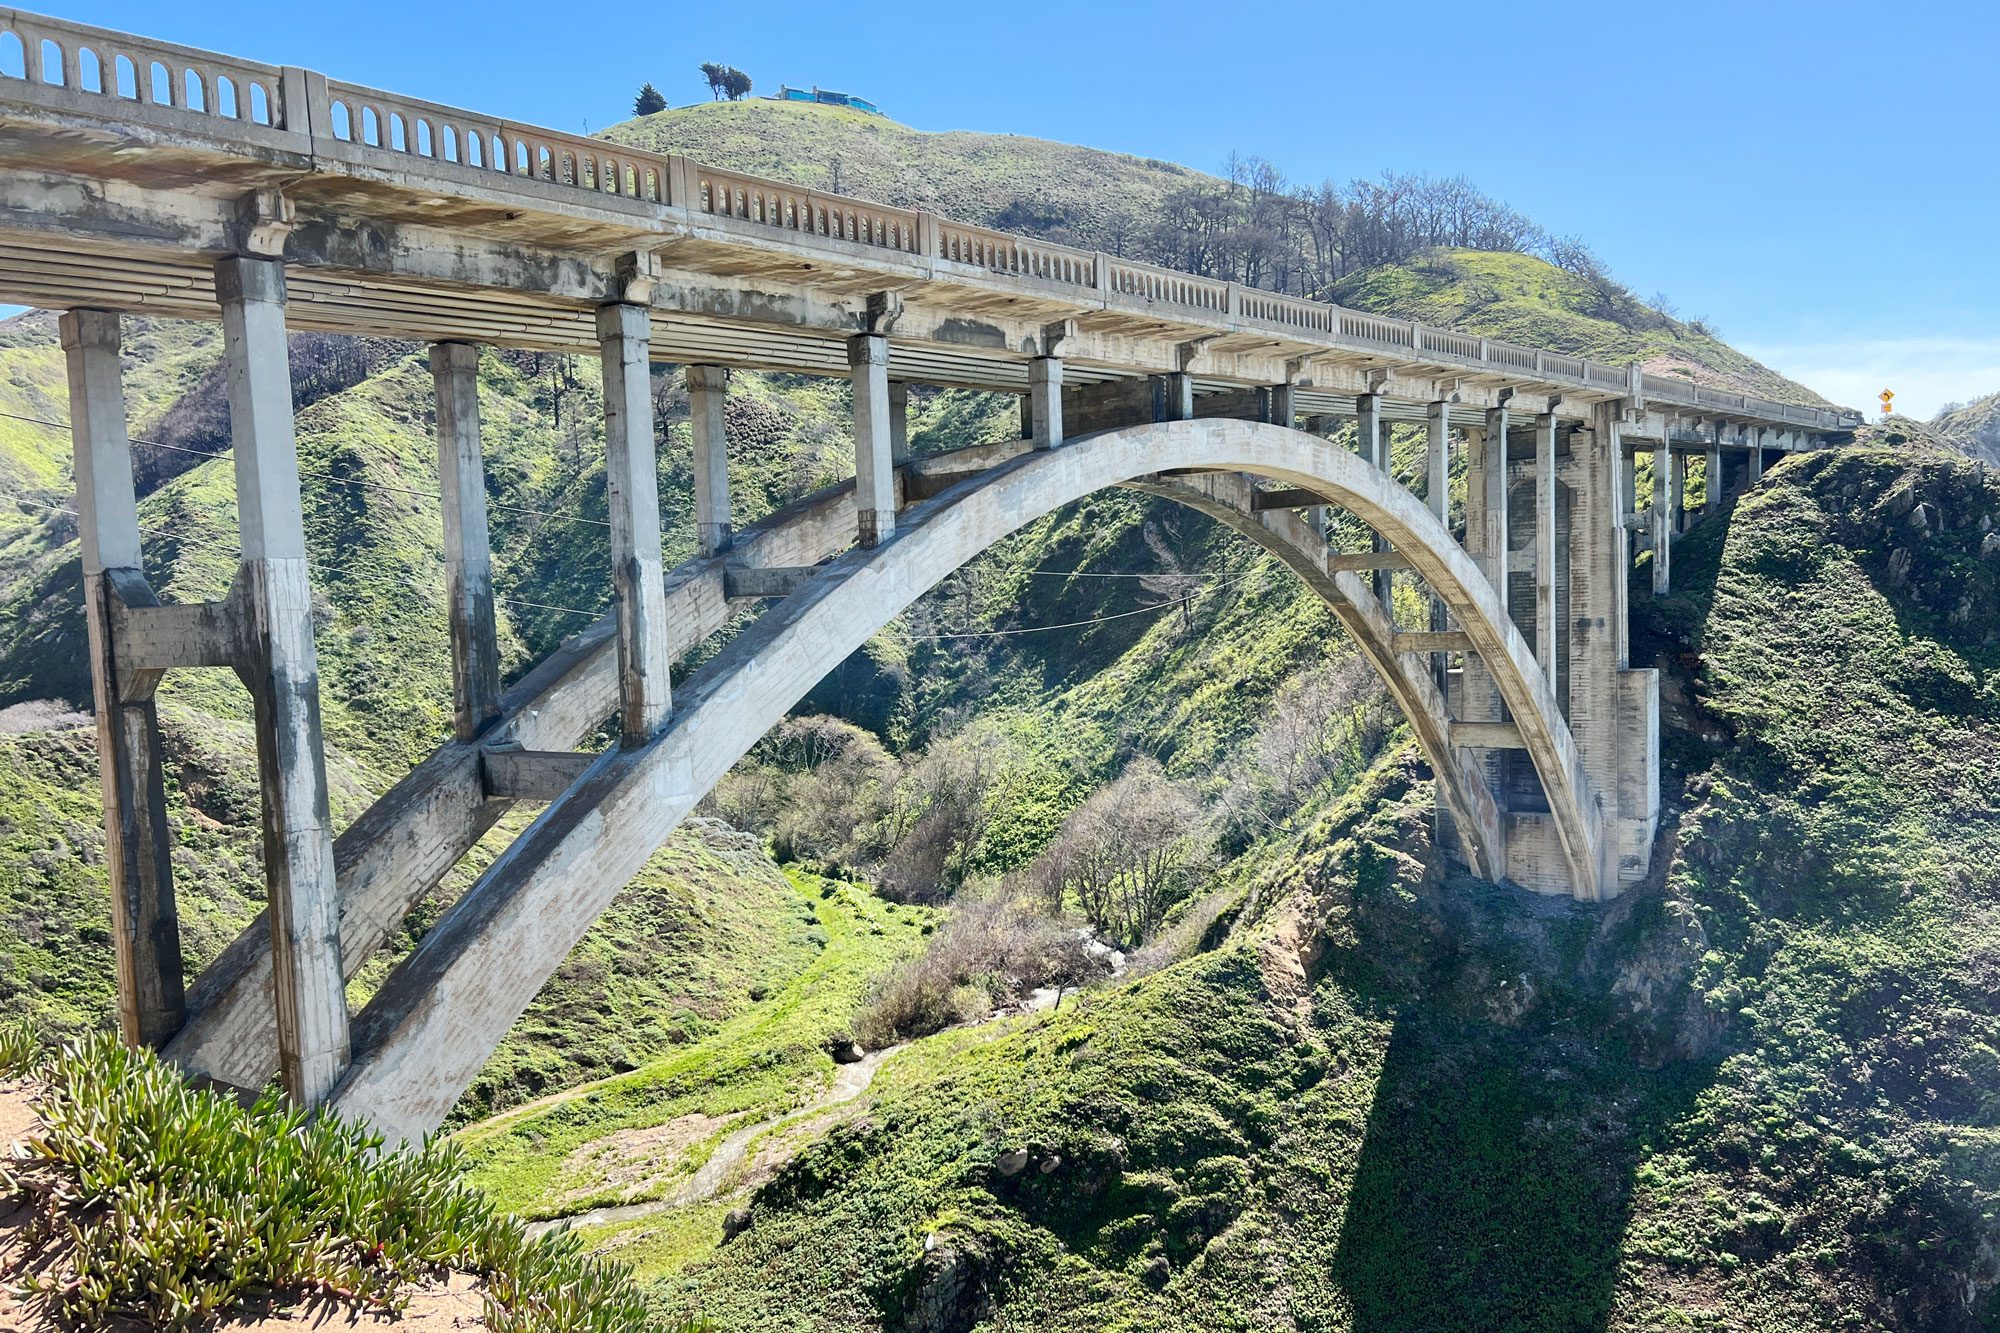 Bixby Canyon Bridge in Big Sur California along Pacific Coast Highway